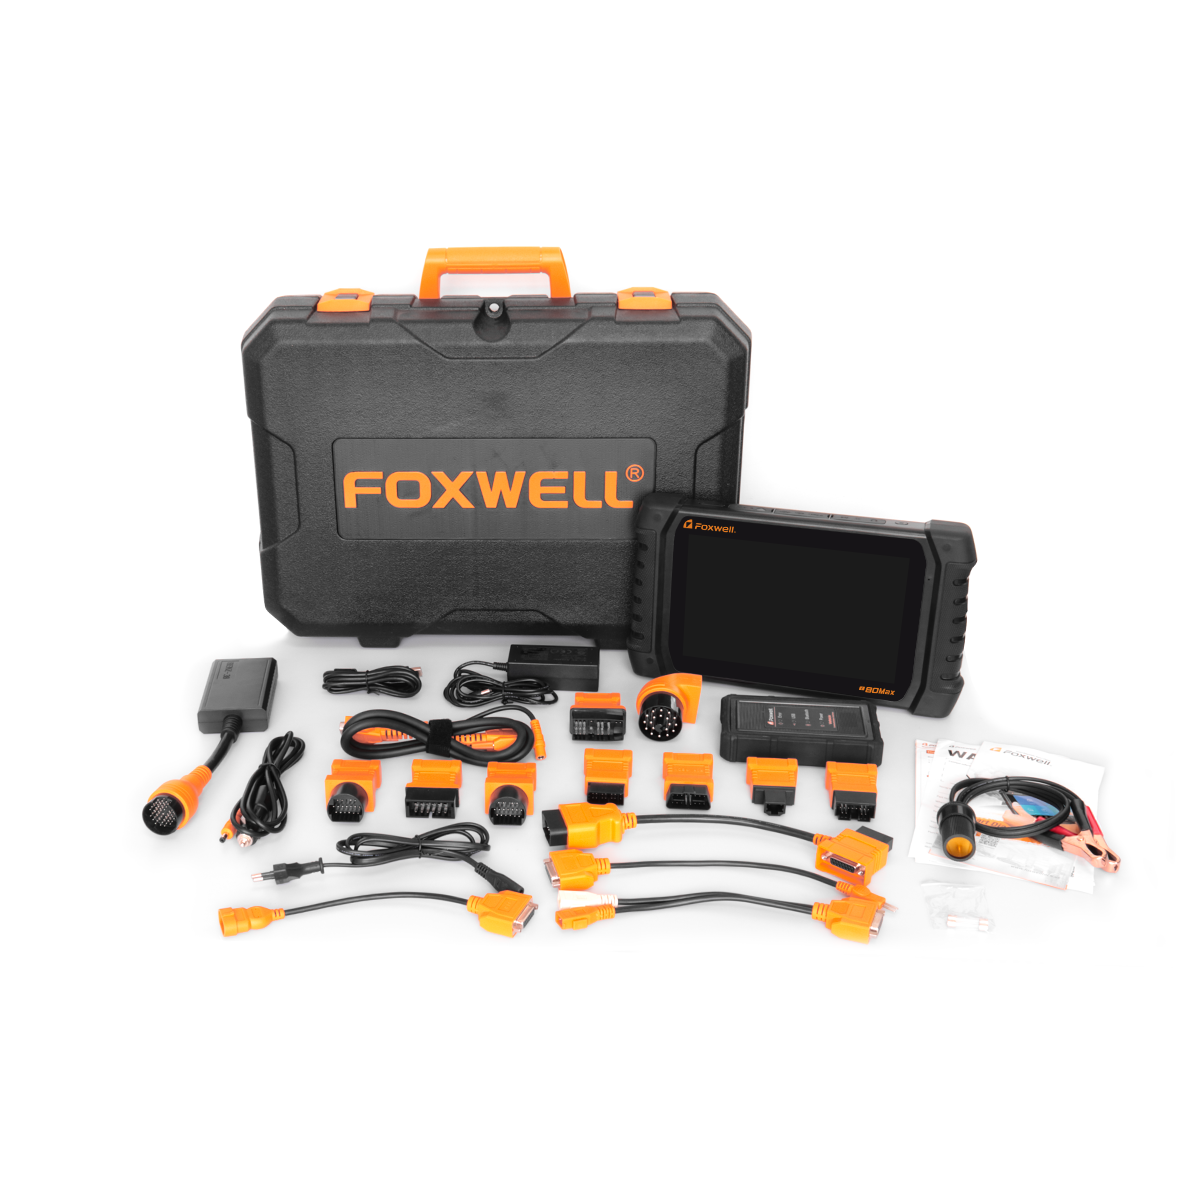 Foxwell I80Max 10.1'' Android Diagnostic System Universal Car Diagnostic Tool Full System Immo/Abs/Epb/Sas/Dpf/Oil Reset Auto Diagnostic Tools